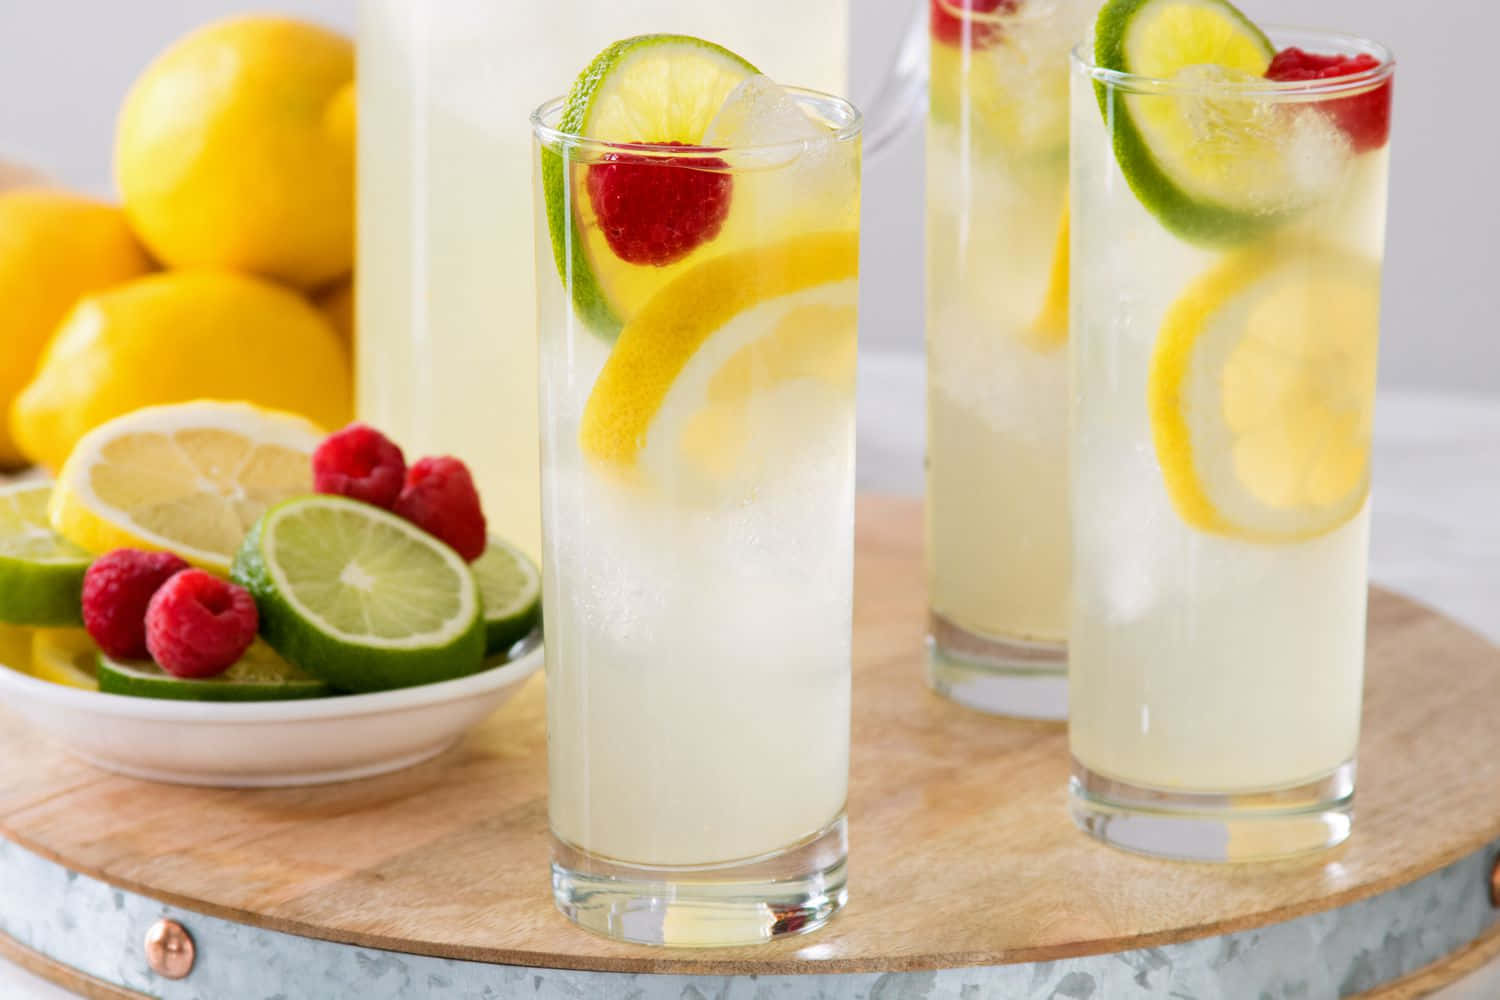 Lemonade With Raspberries And Lemons